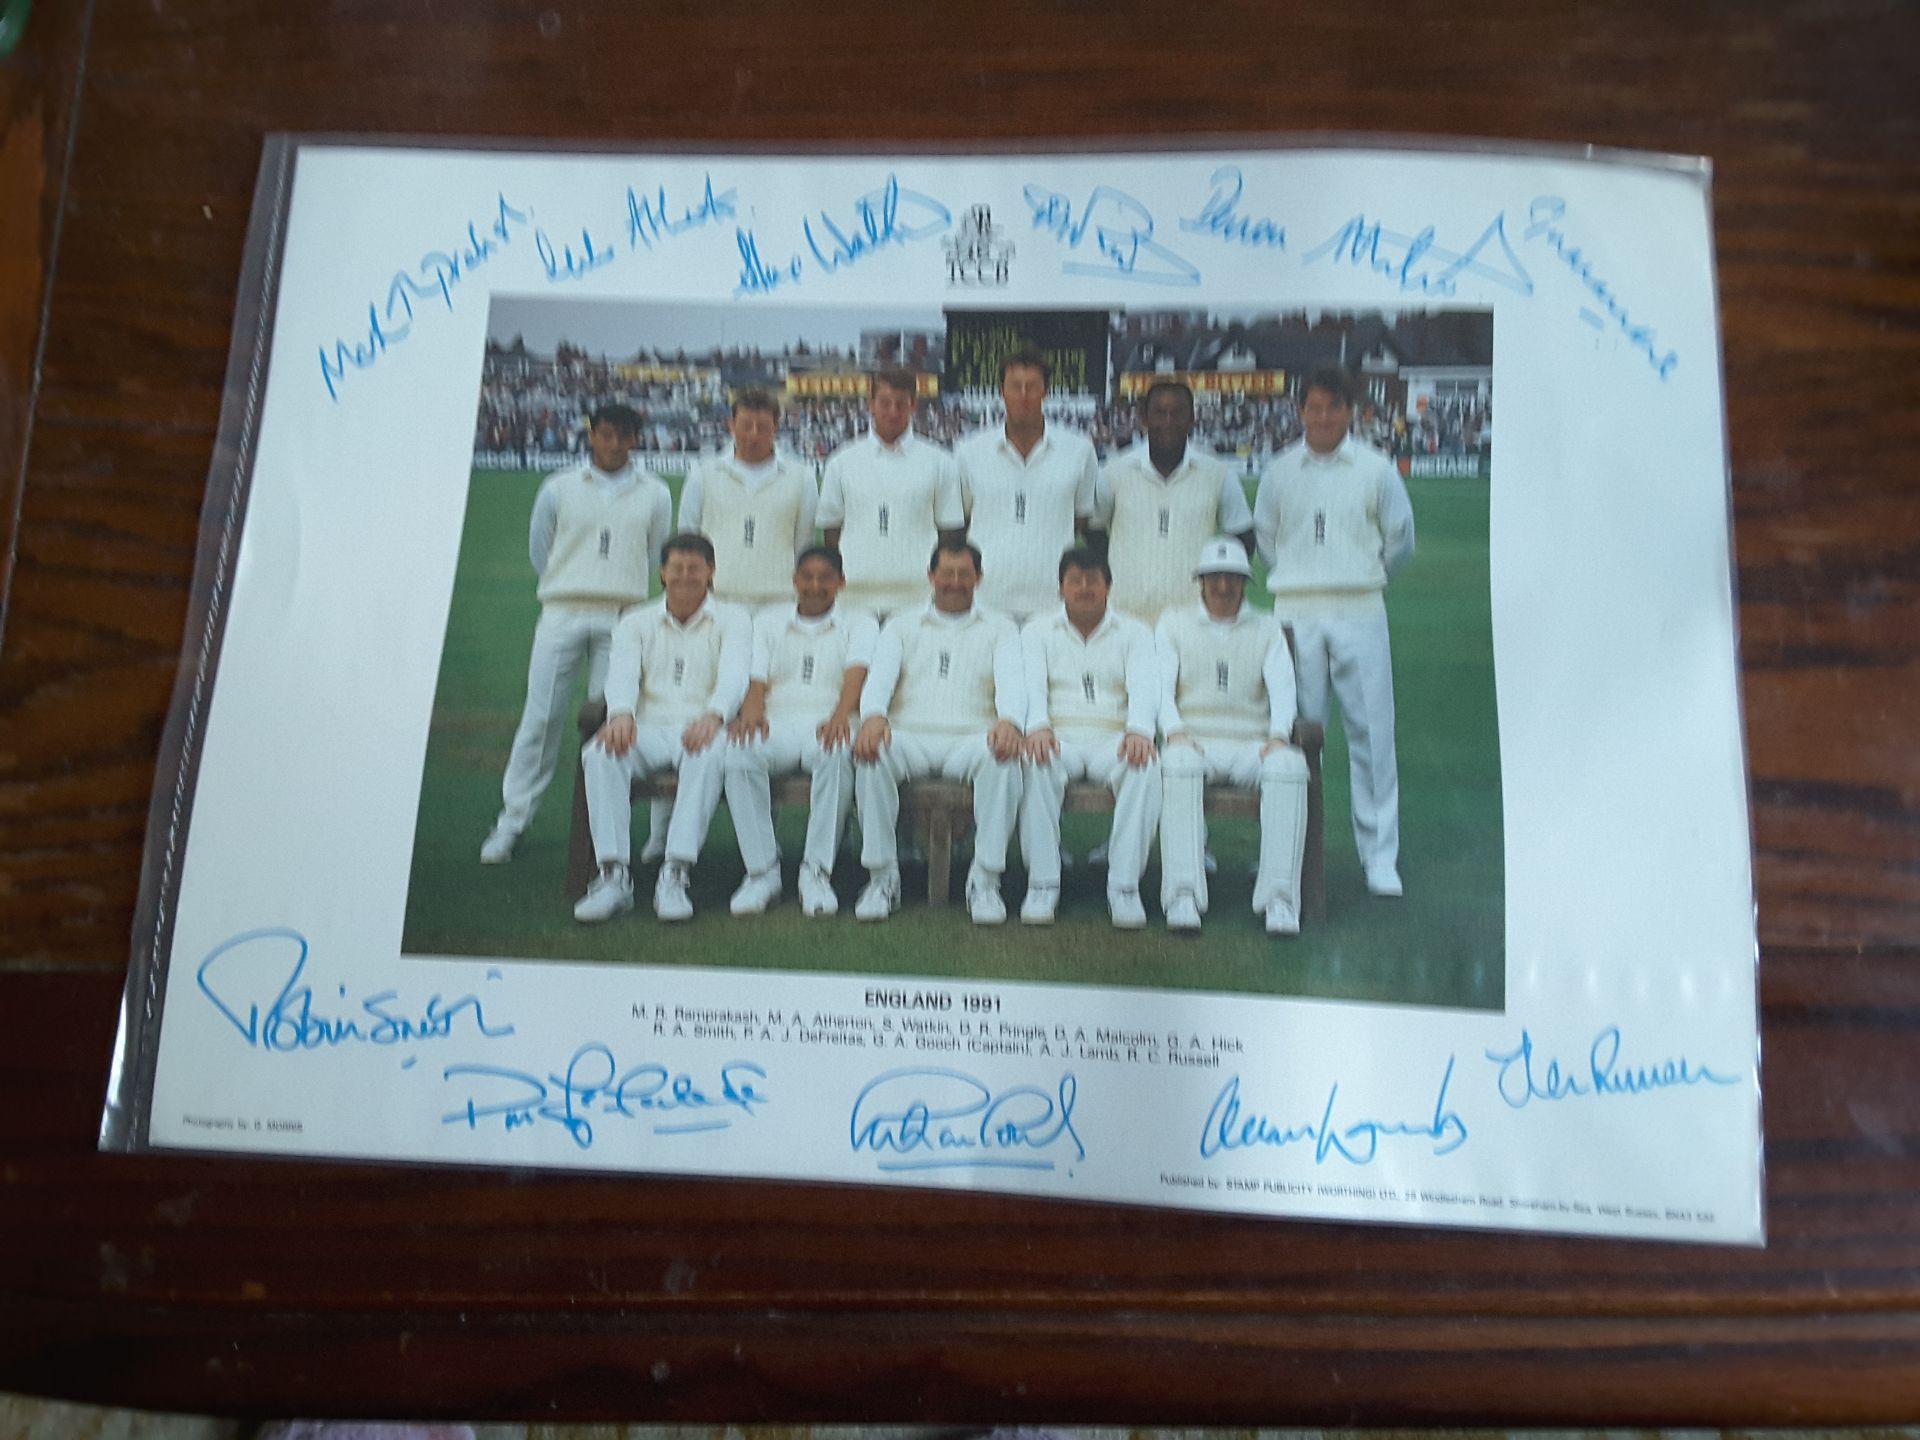 1991 England Cricket Team Photo - Image 2 of 3